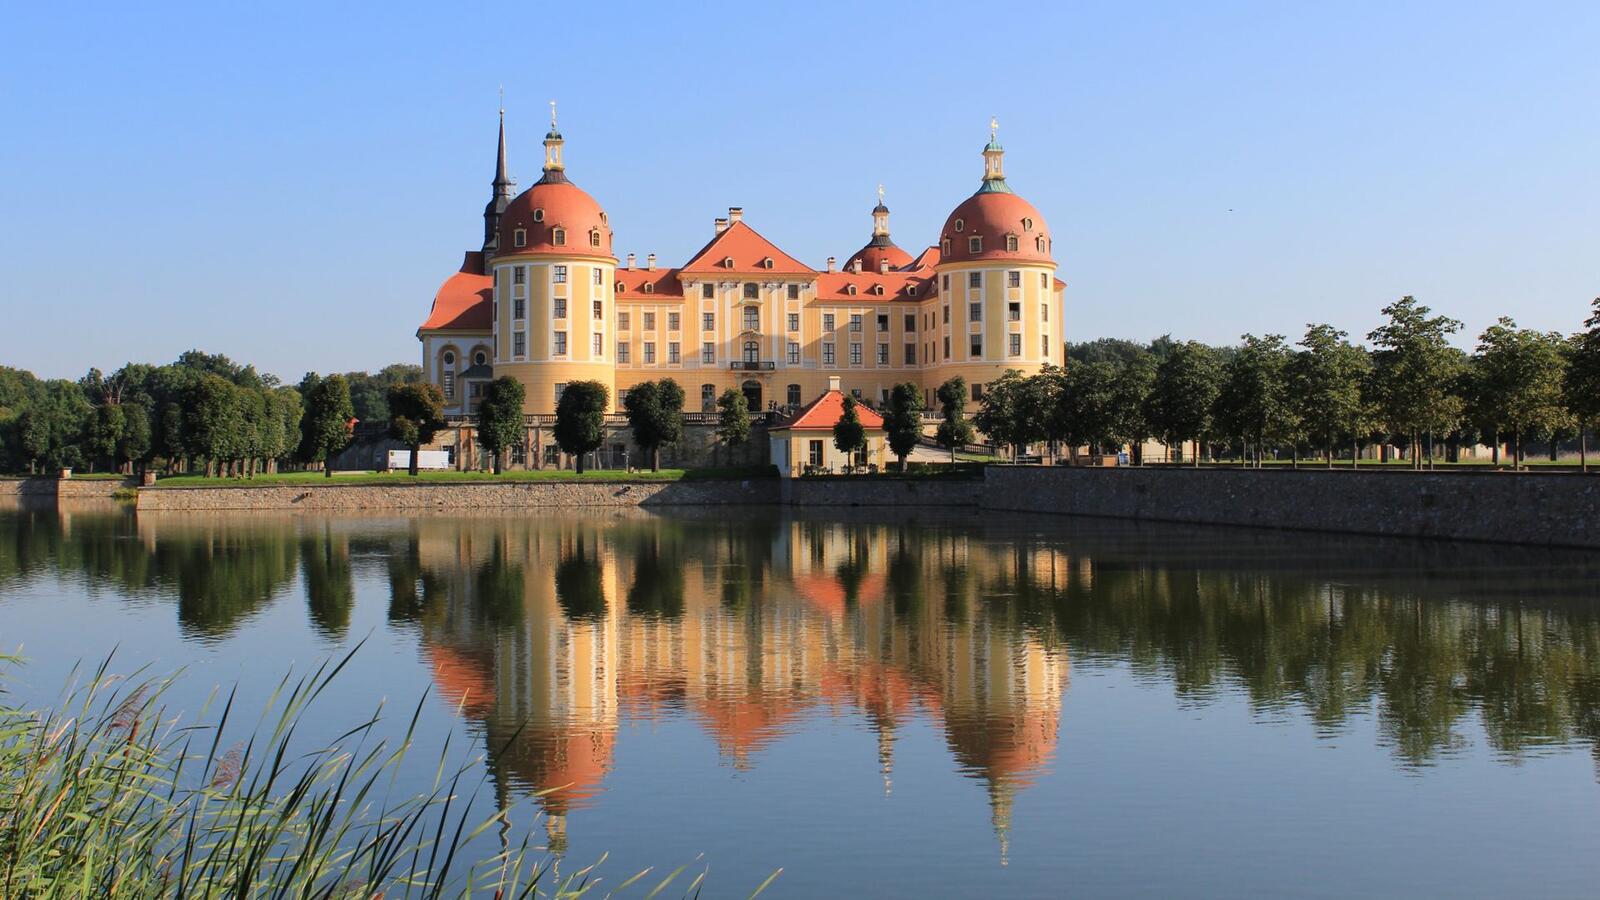 Бесплатное фото Потрясающий дворец в Германии на берегу реки